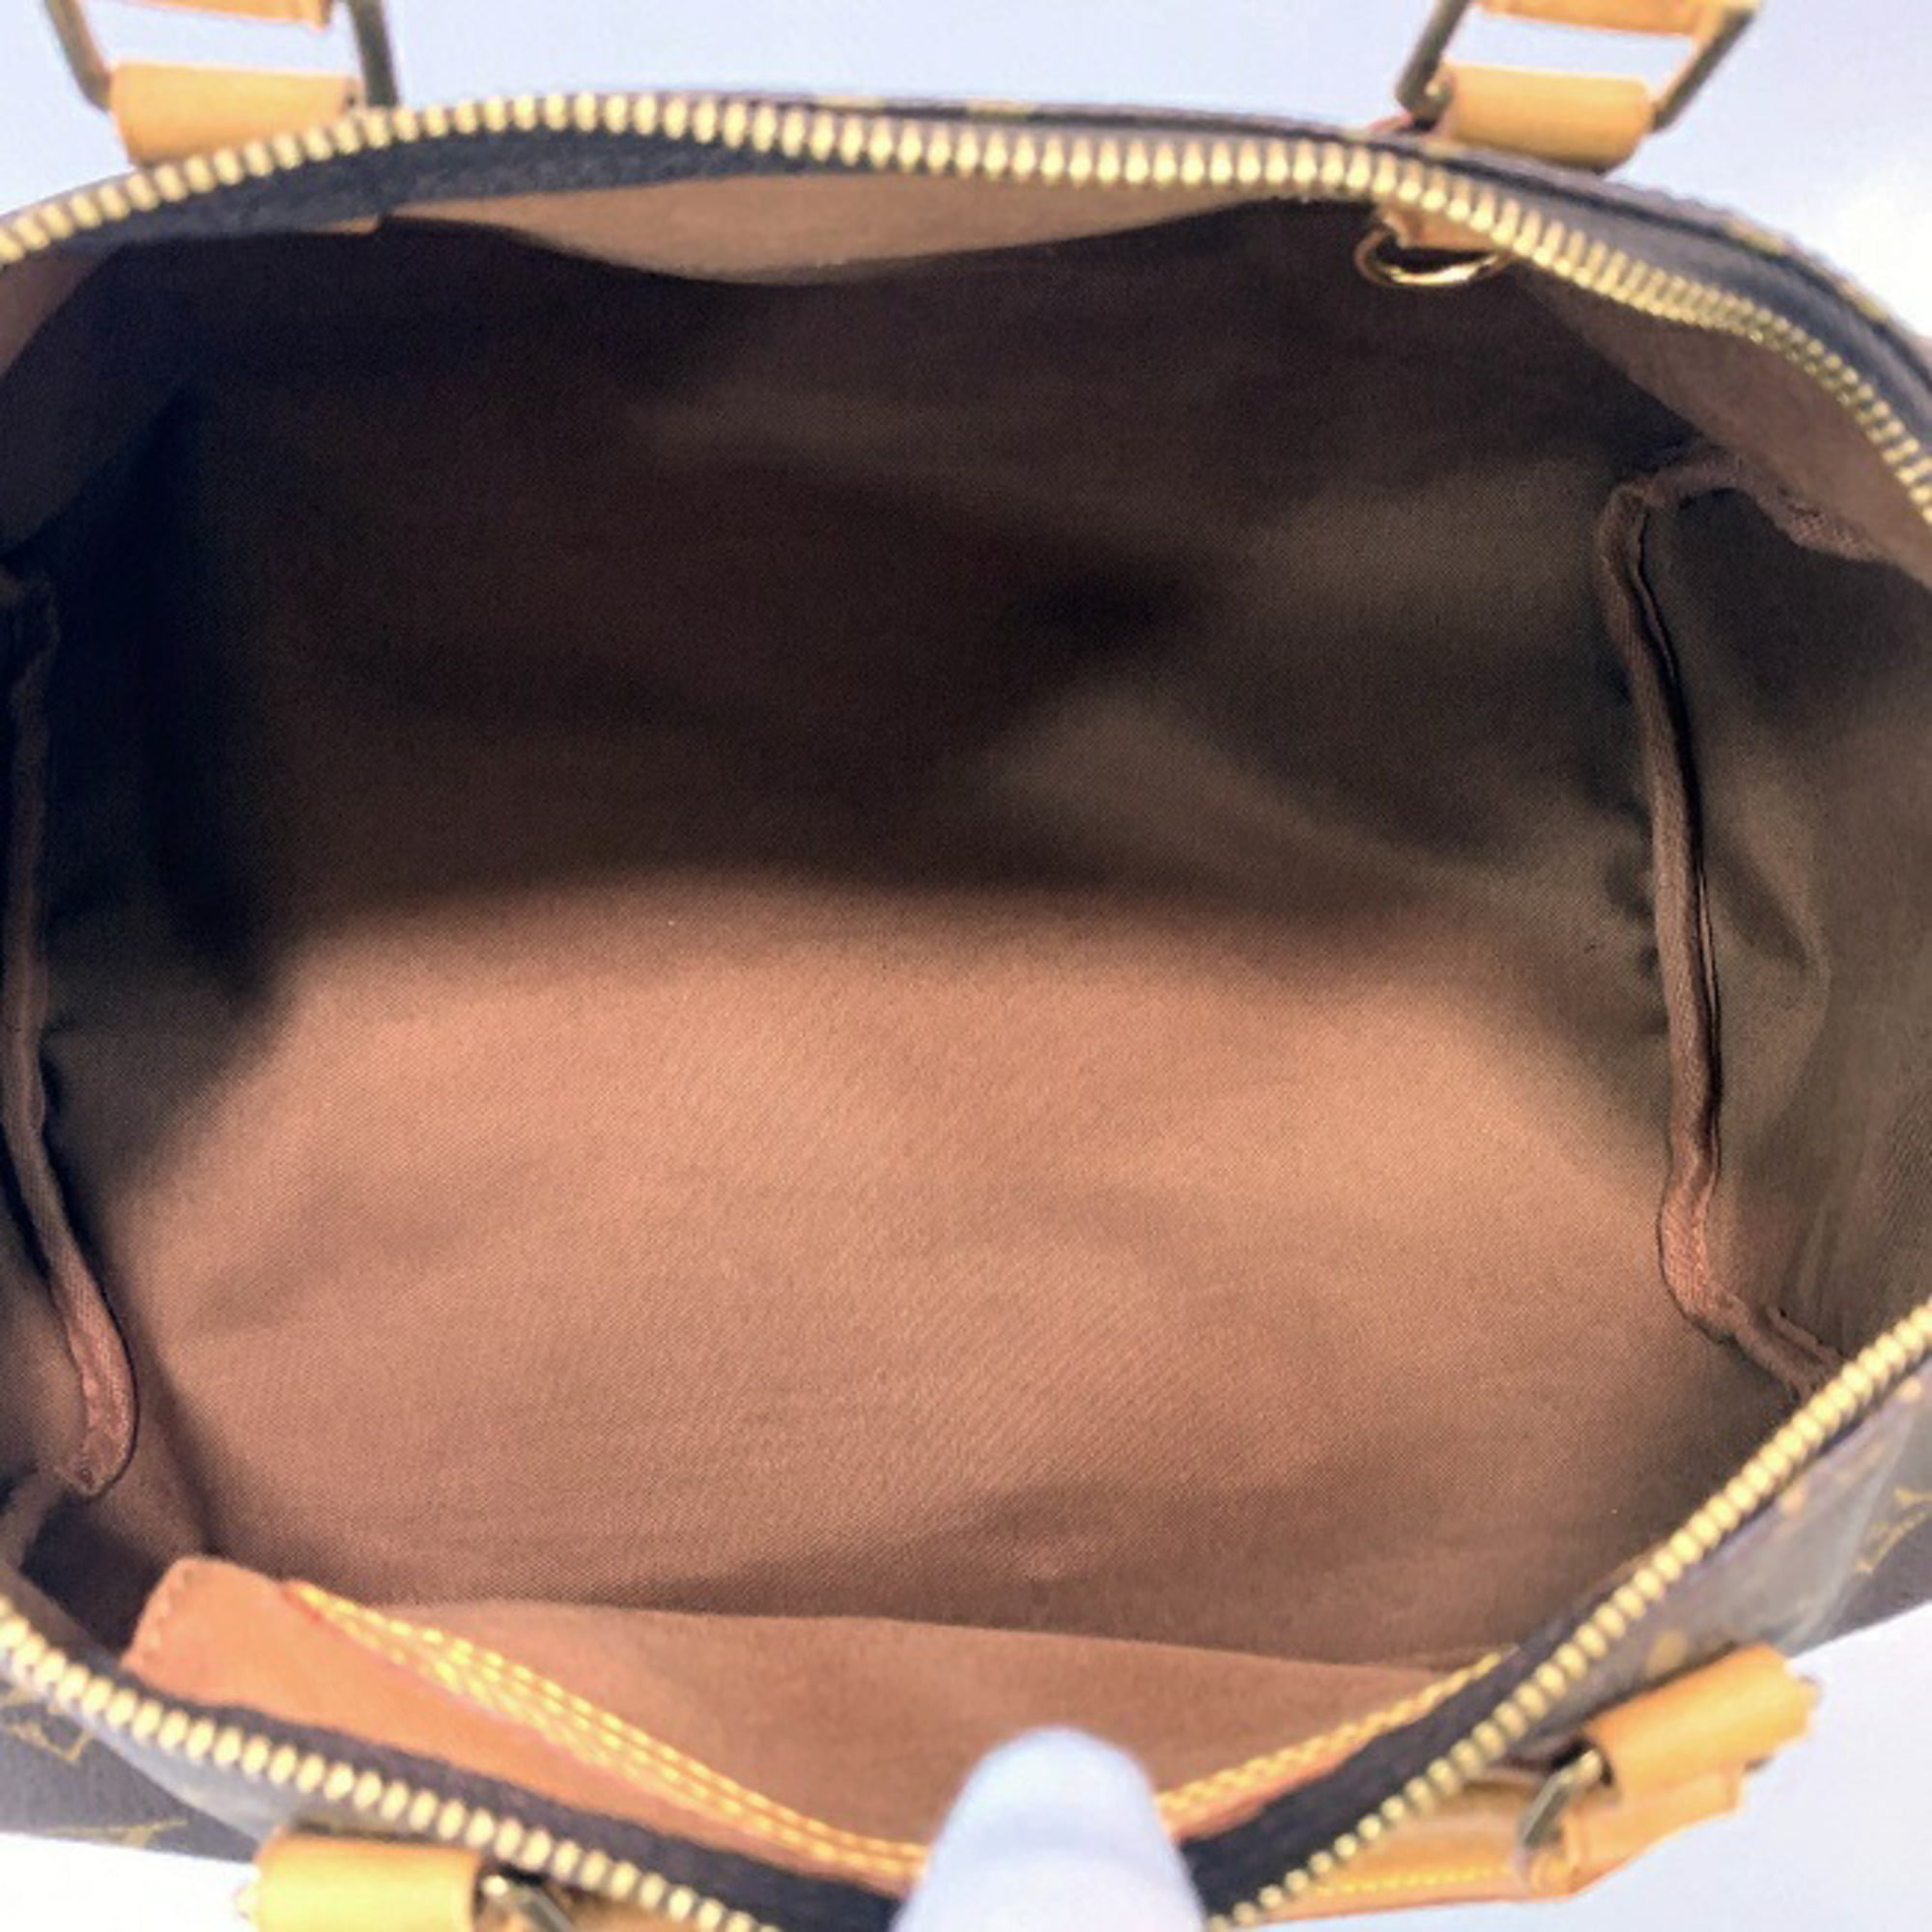 Authenticated Used LOUIS VUITTON Louis Vuitton Speedy 40 Boston Bag Handbag  Monogram M41522 SA852 